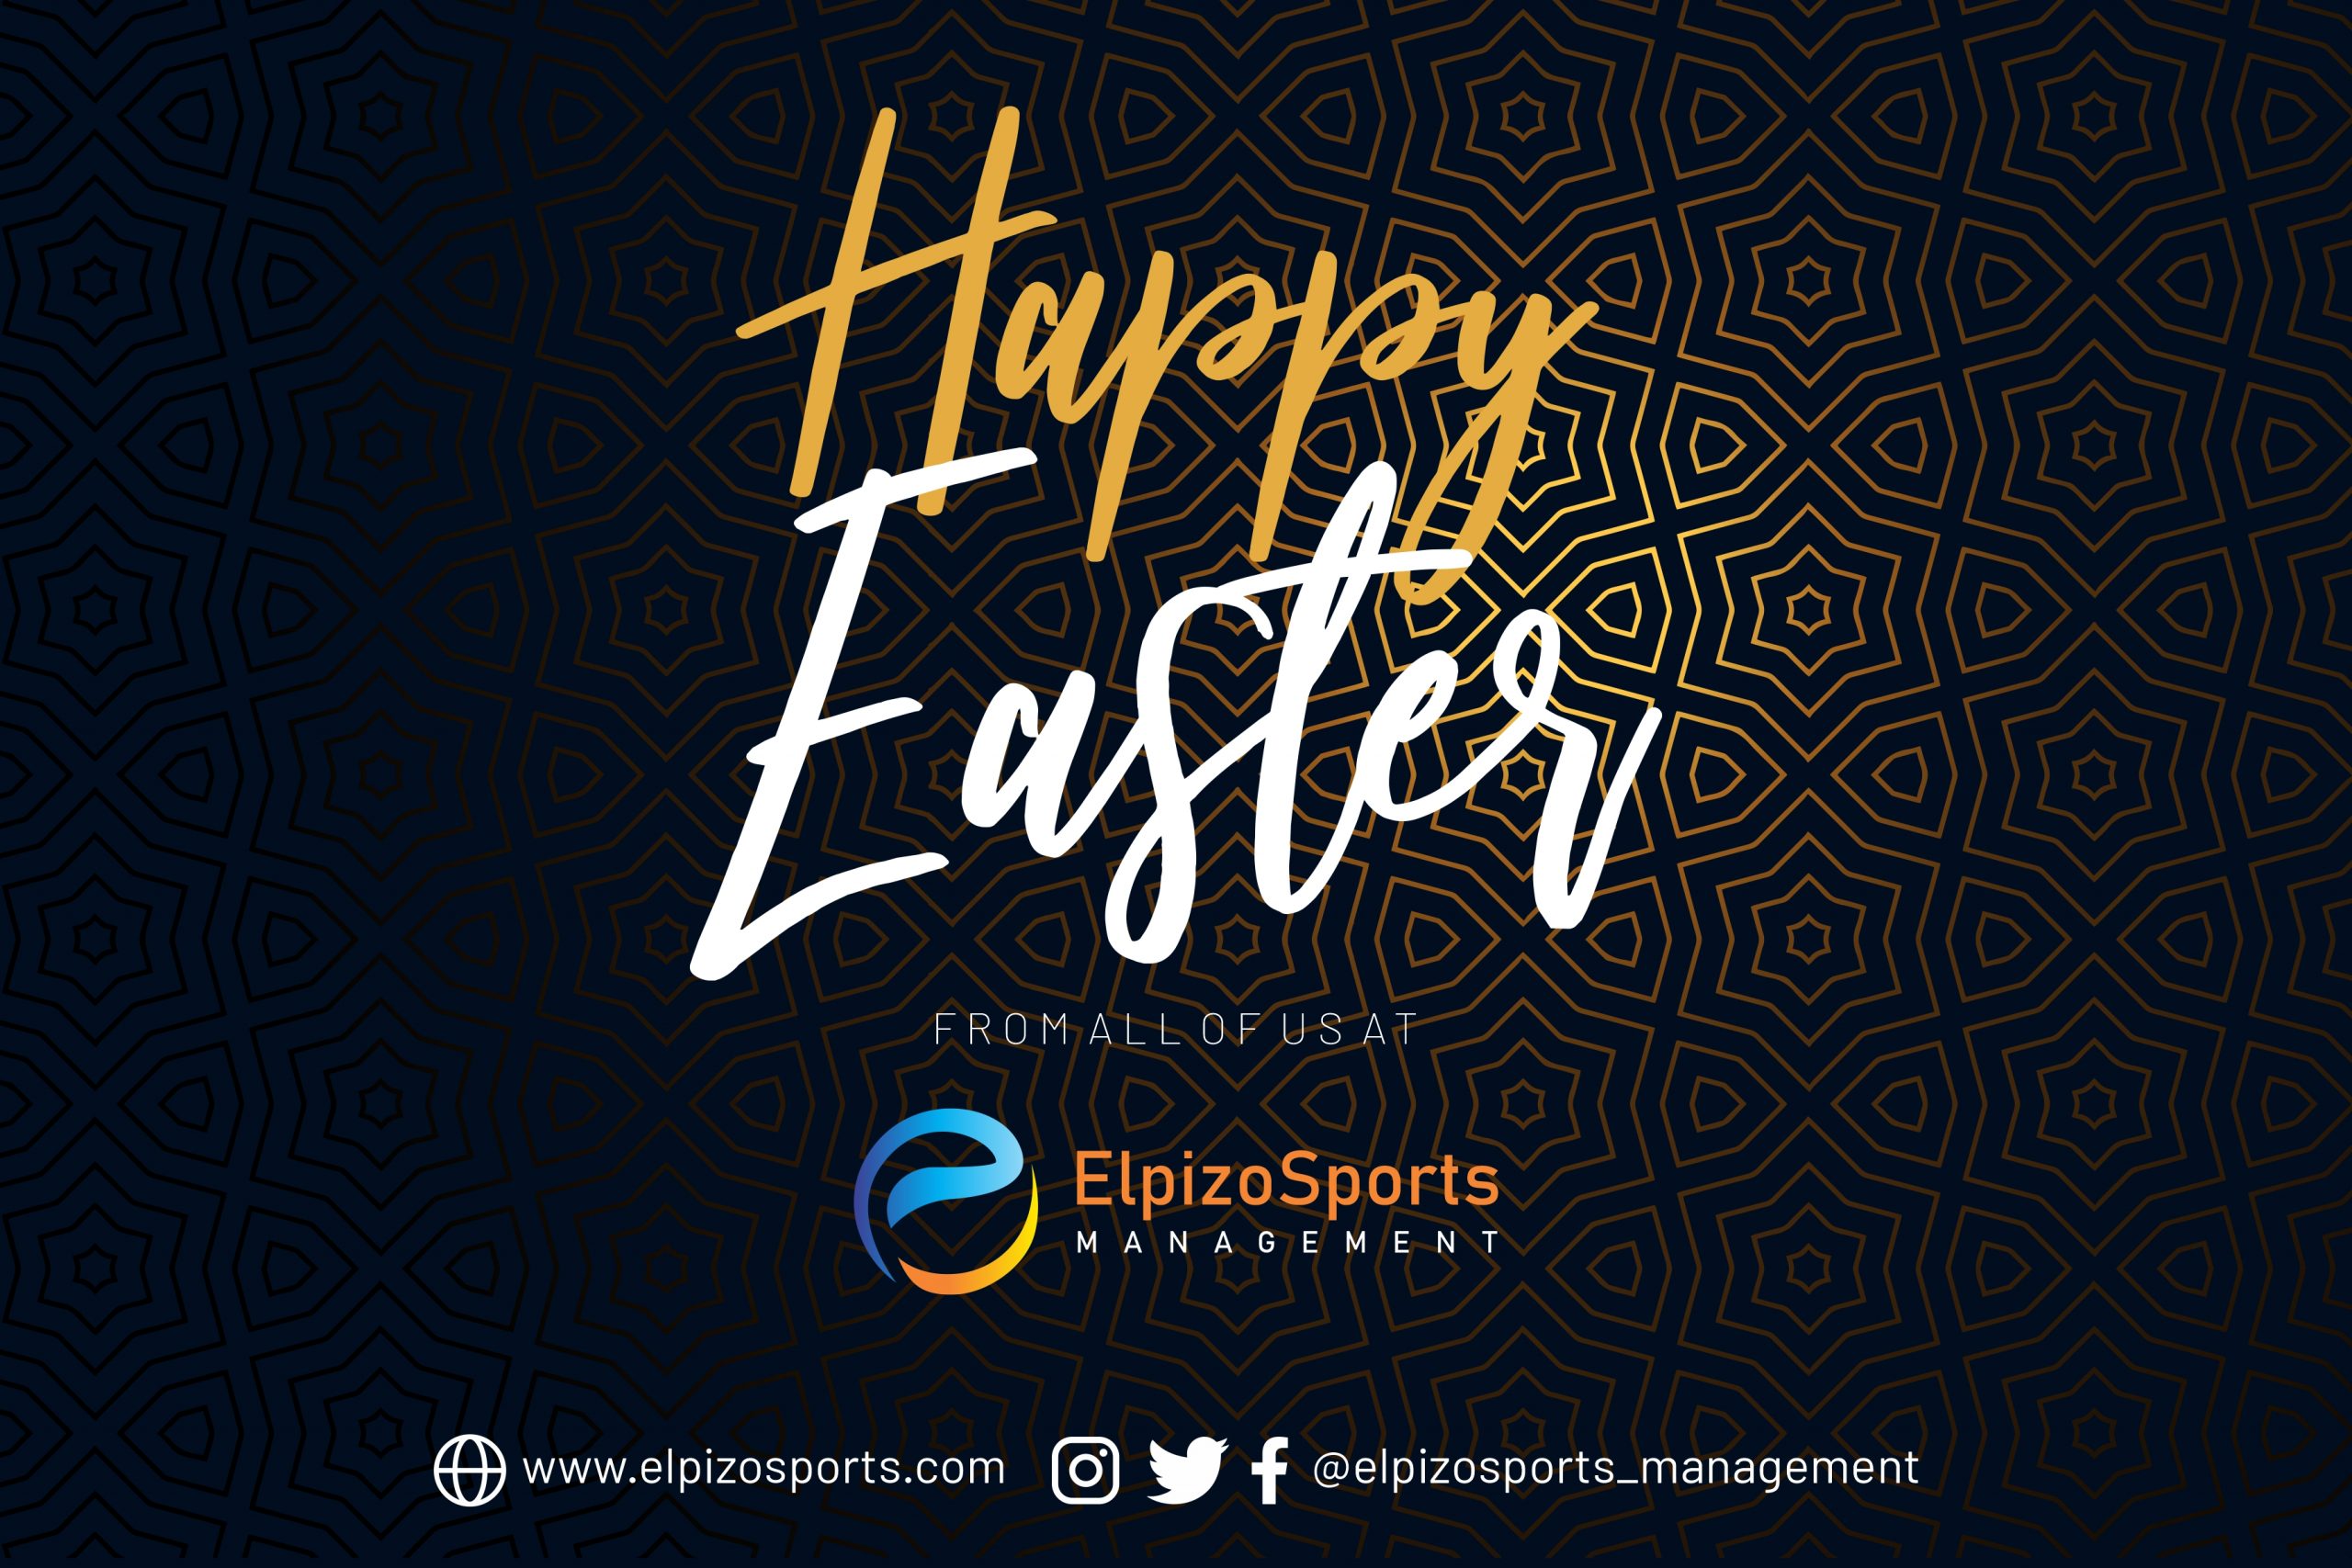 Elpizo Sports Management Felicitates with Christians on the Resurrection of Jesus Christ